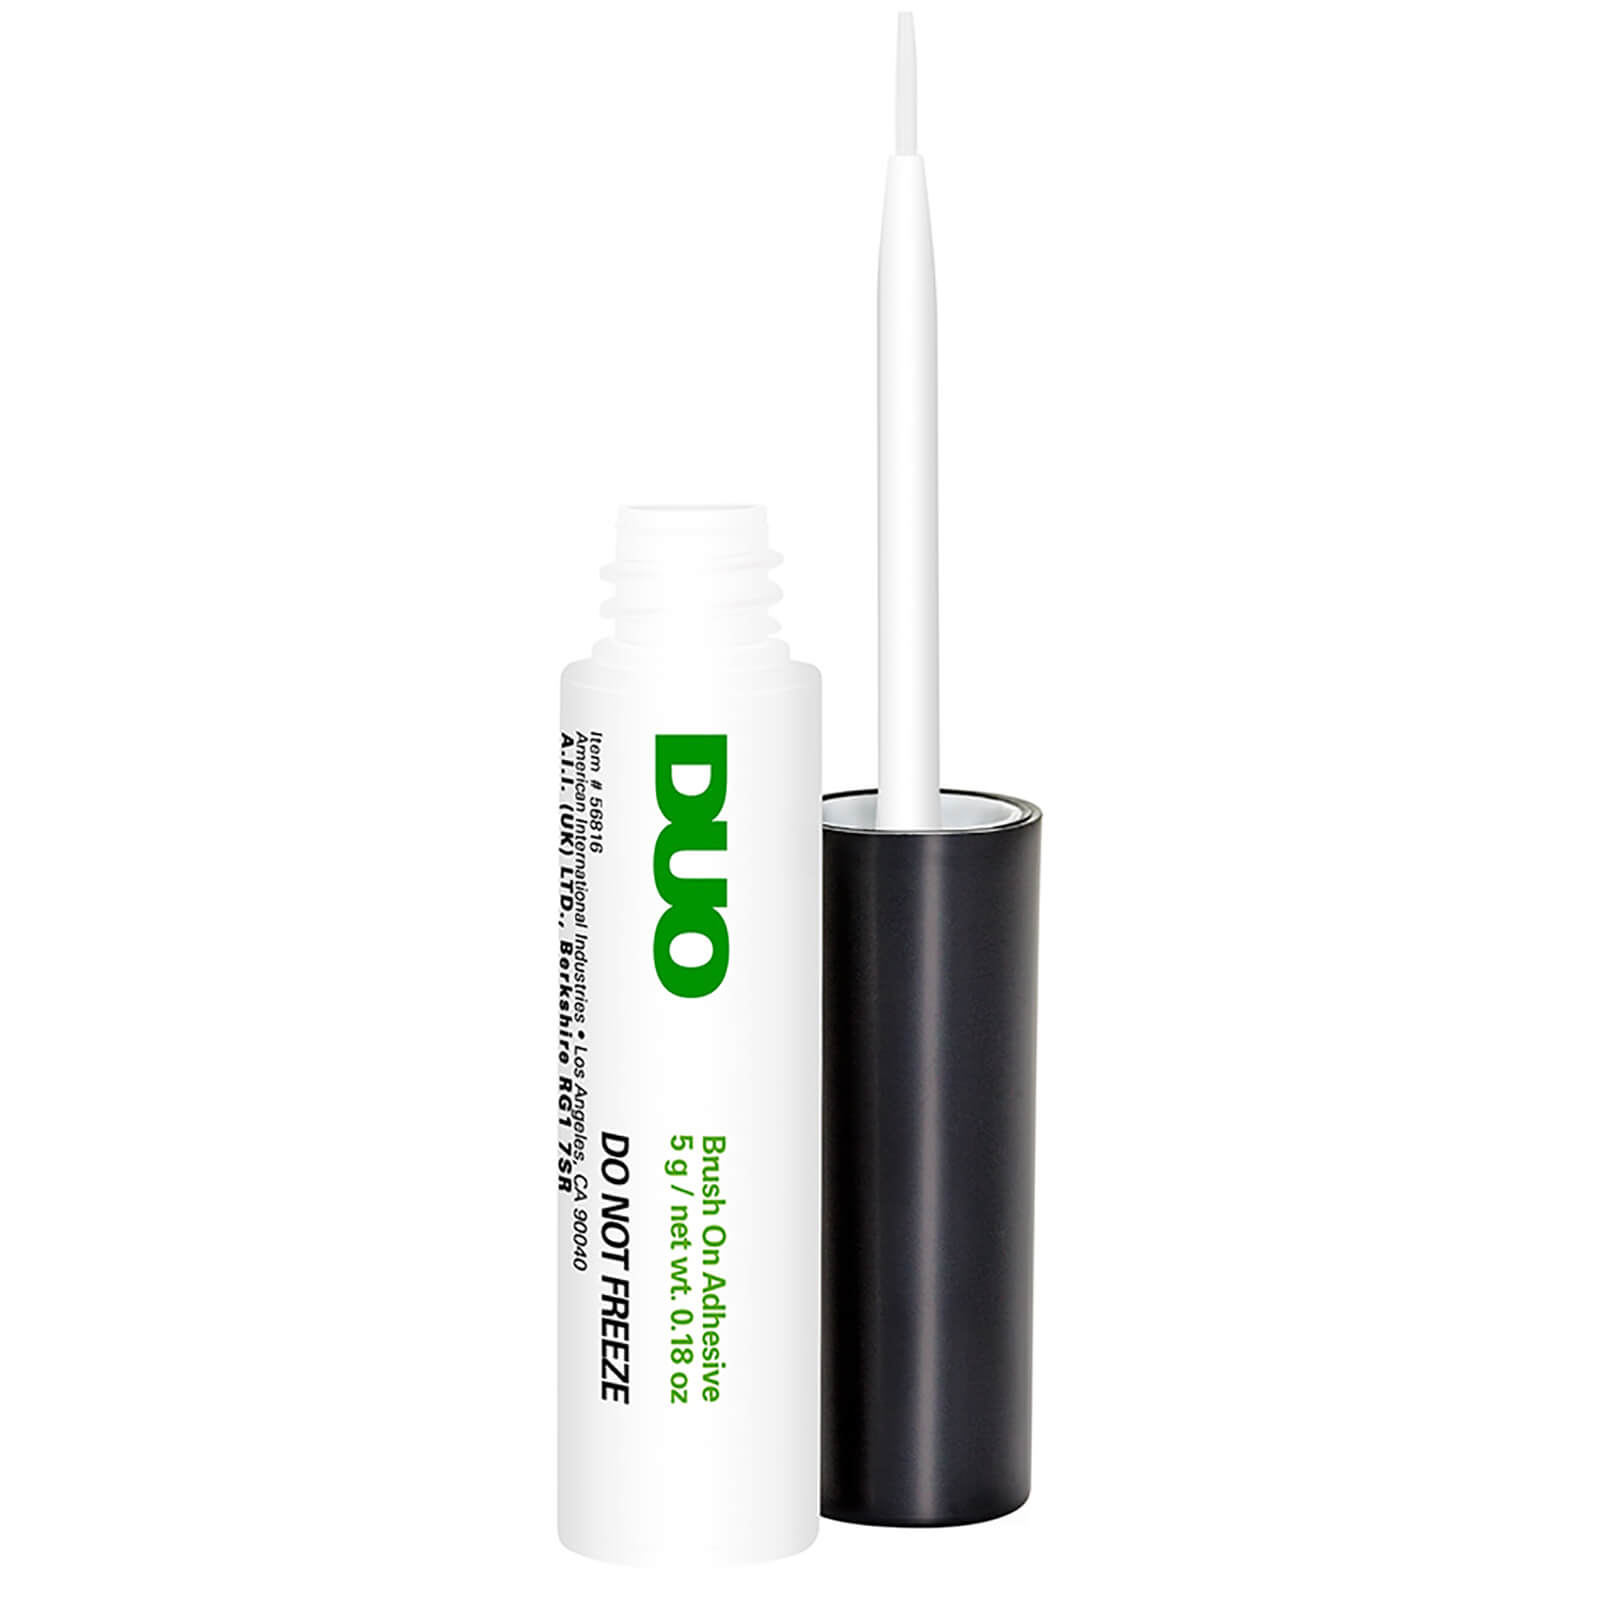 MAC Duo Non-Latex Lash Adhesive - White/Clear